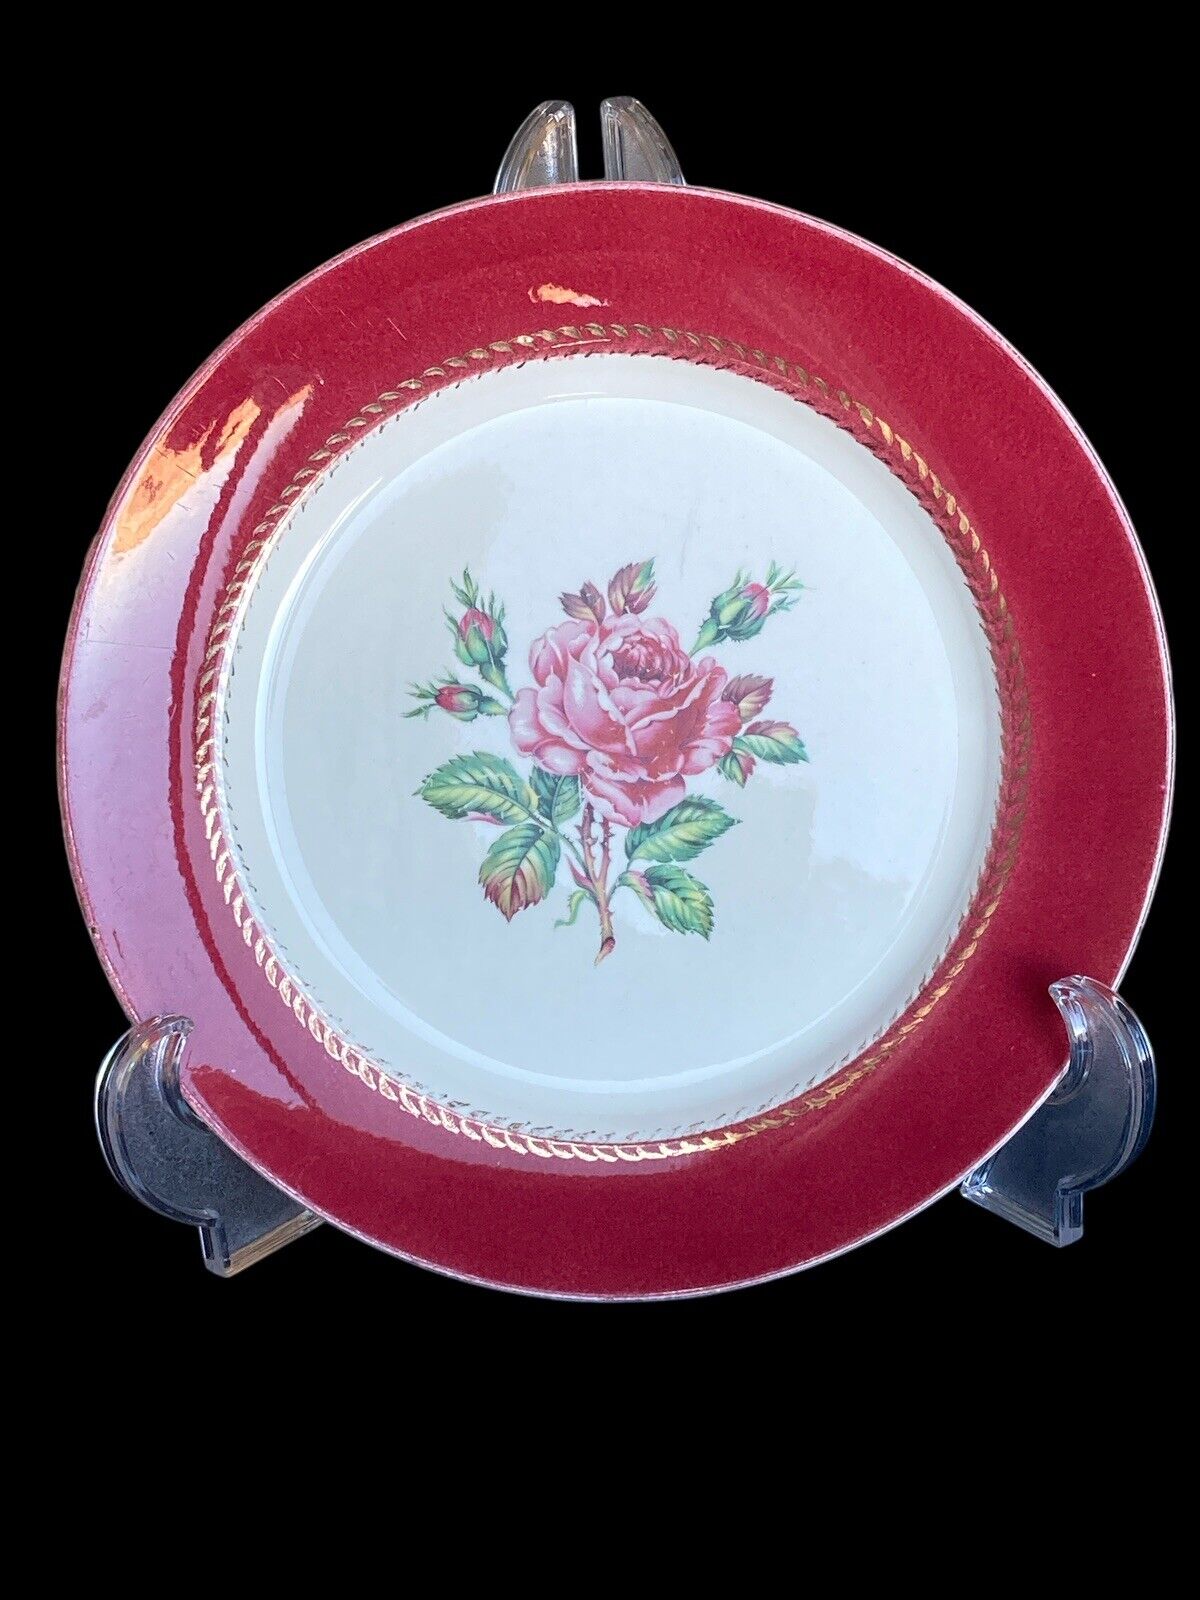 Vintage Stetson Decorative Ceramic Floral Wall Decor Plate 10” DIA